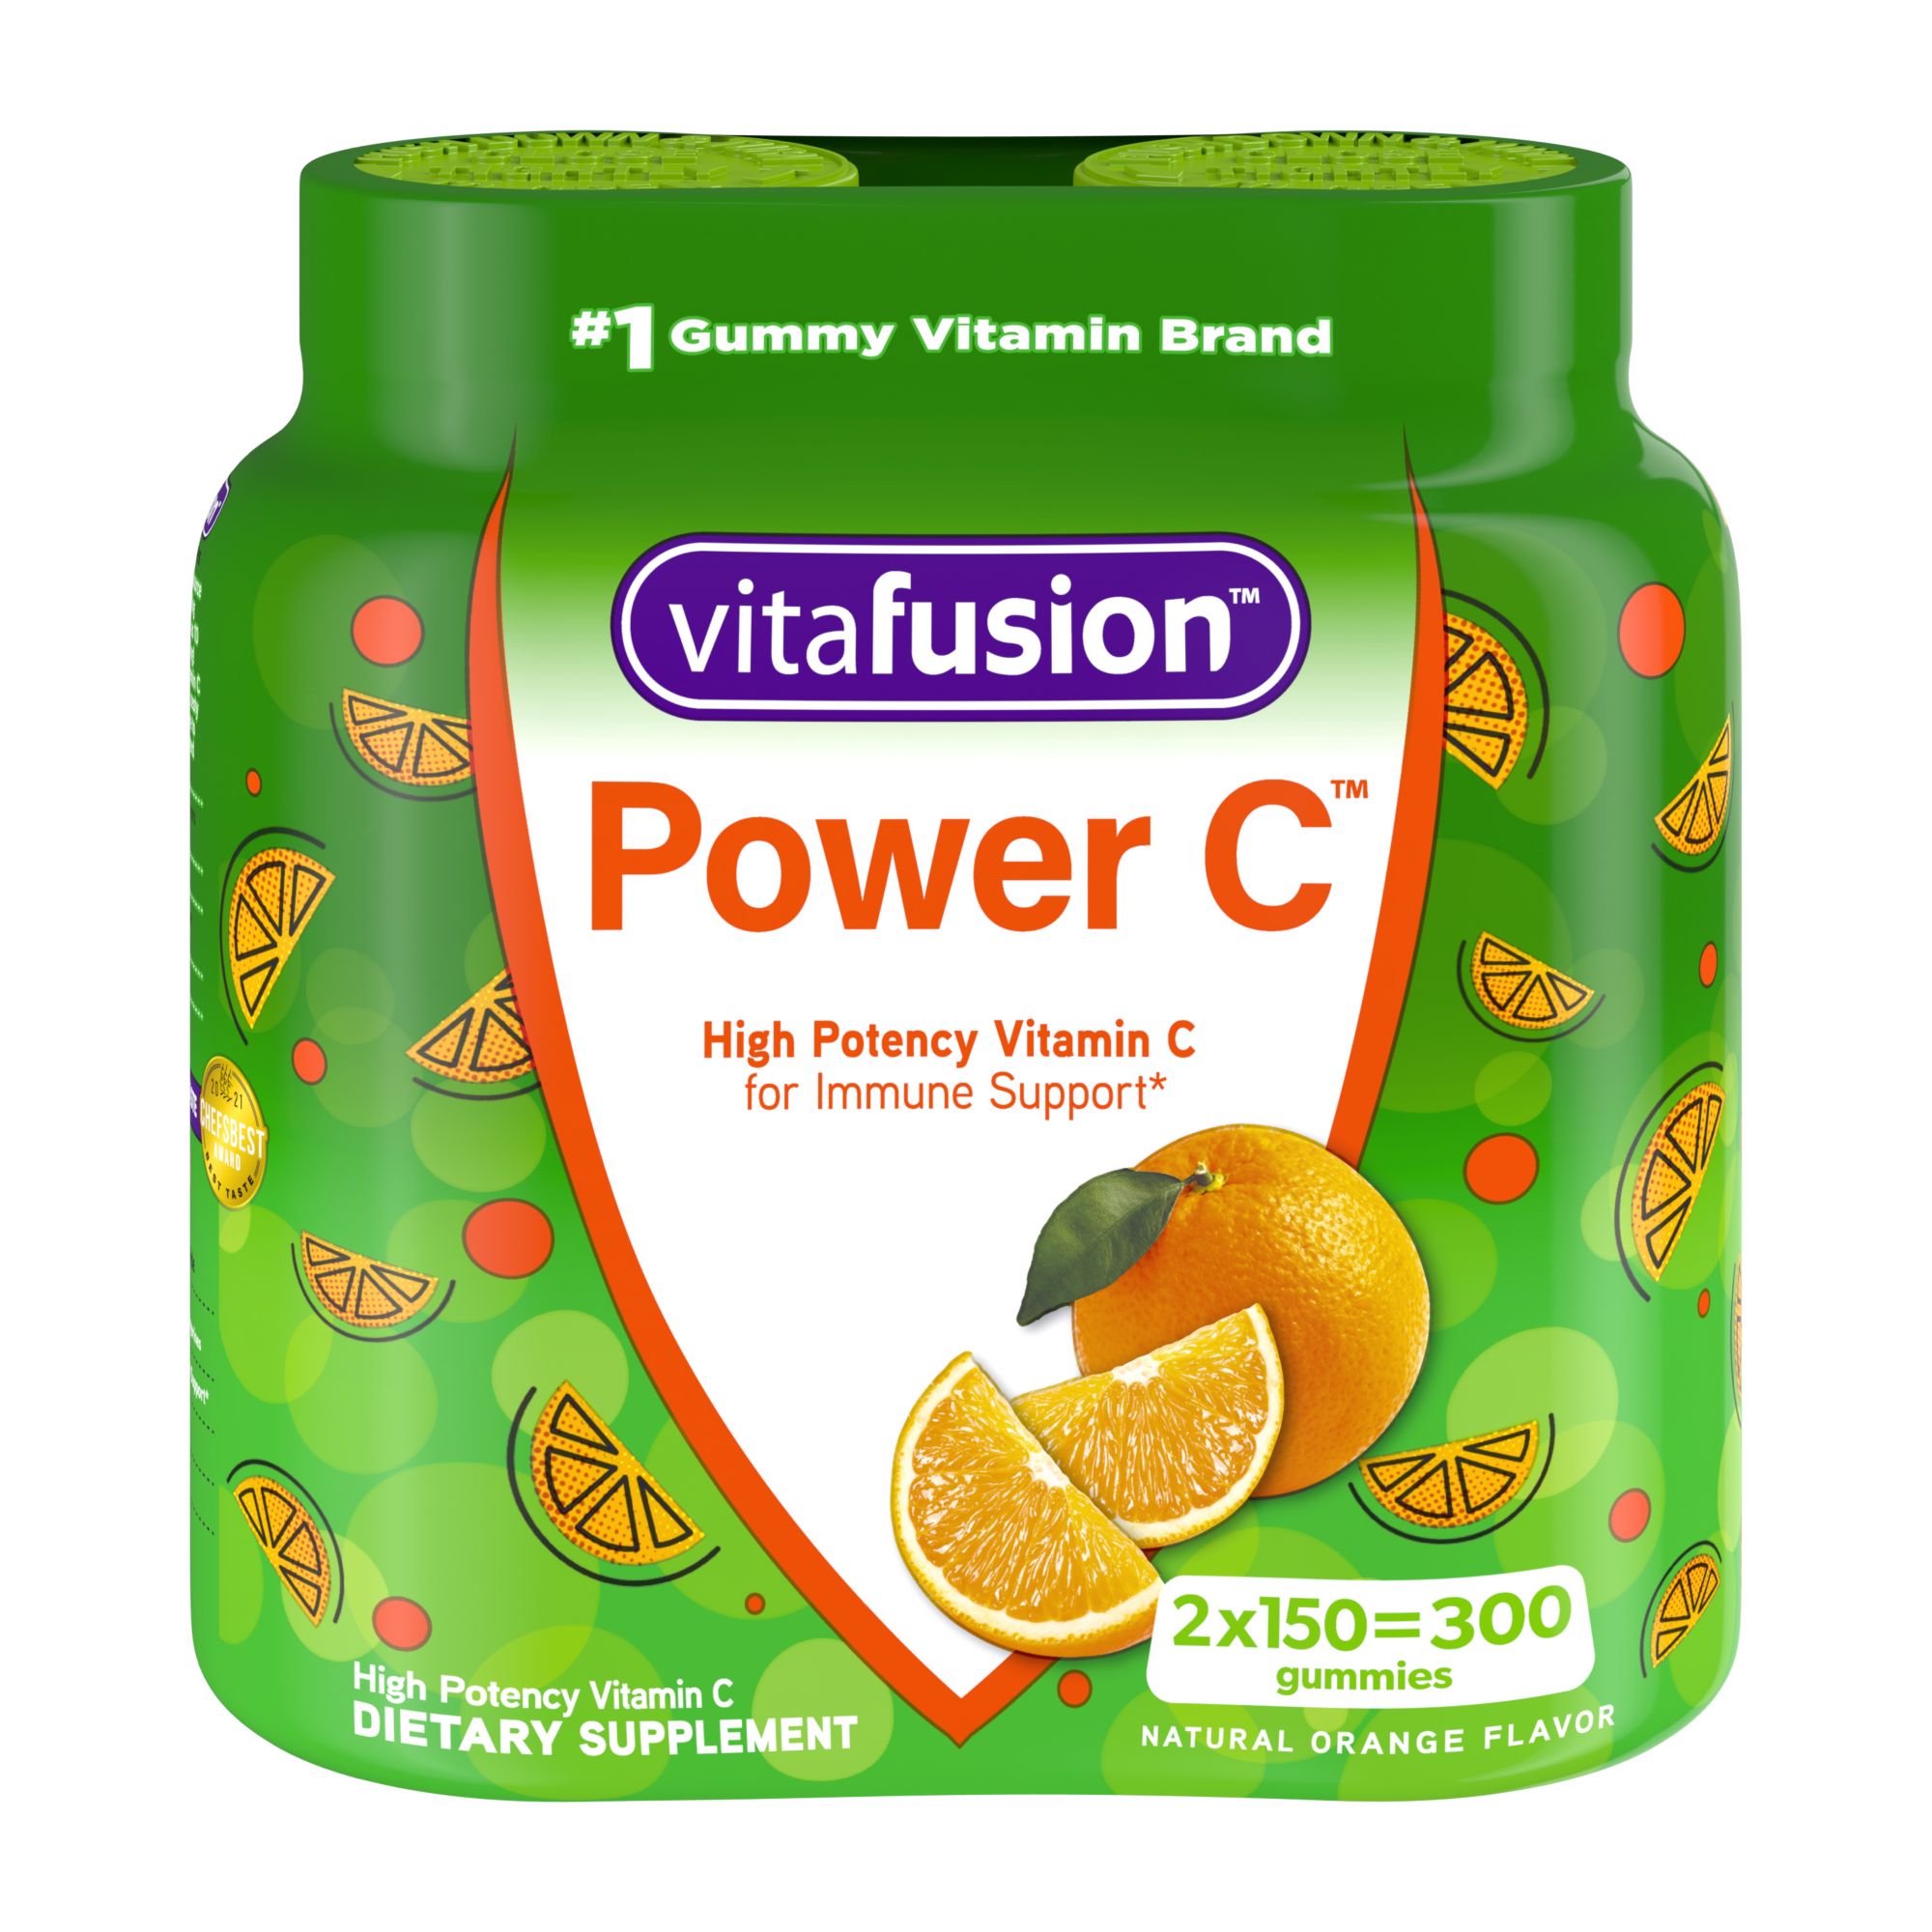 Vitafusion Power C Gummy Vitamin, 2 pk./150 ct.